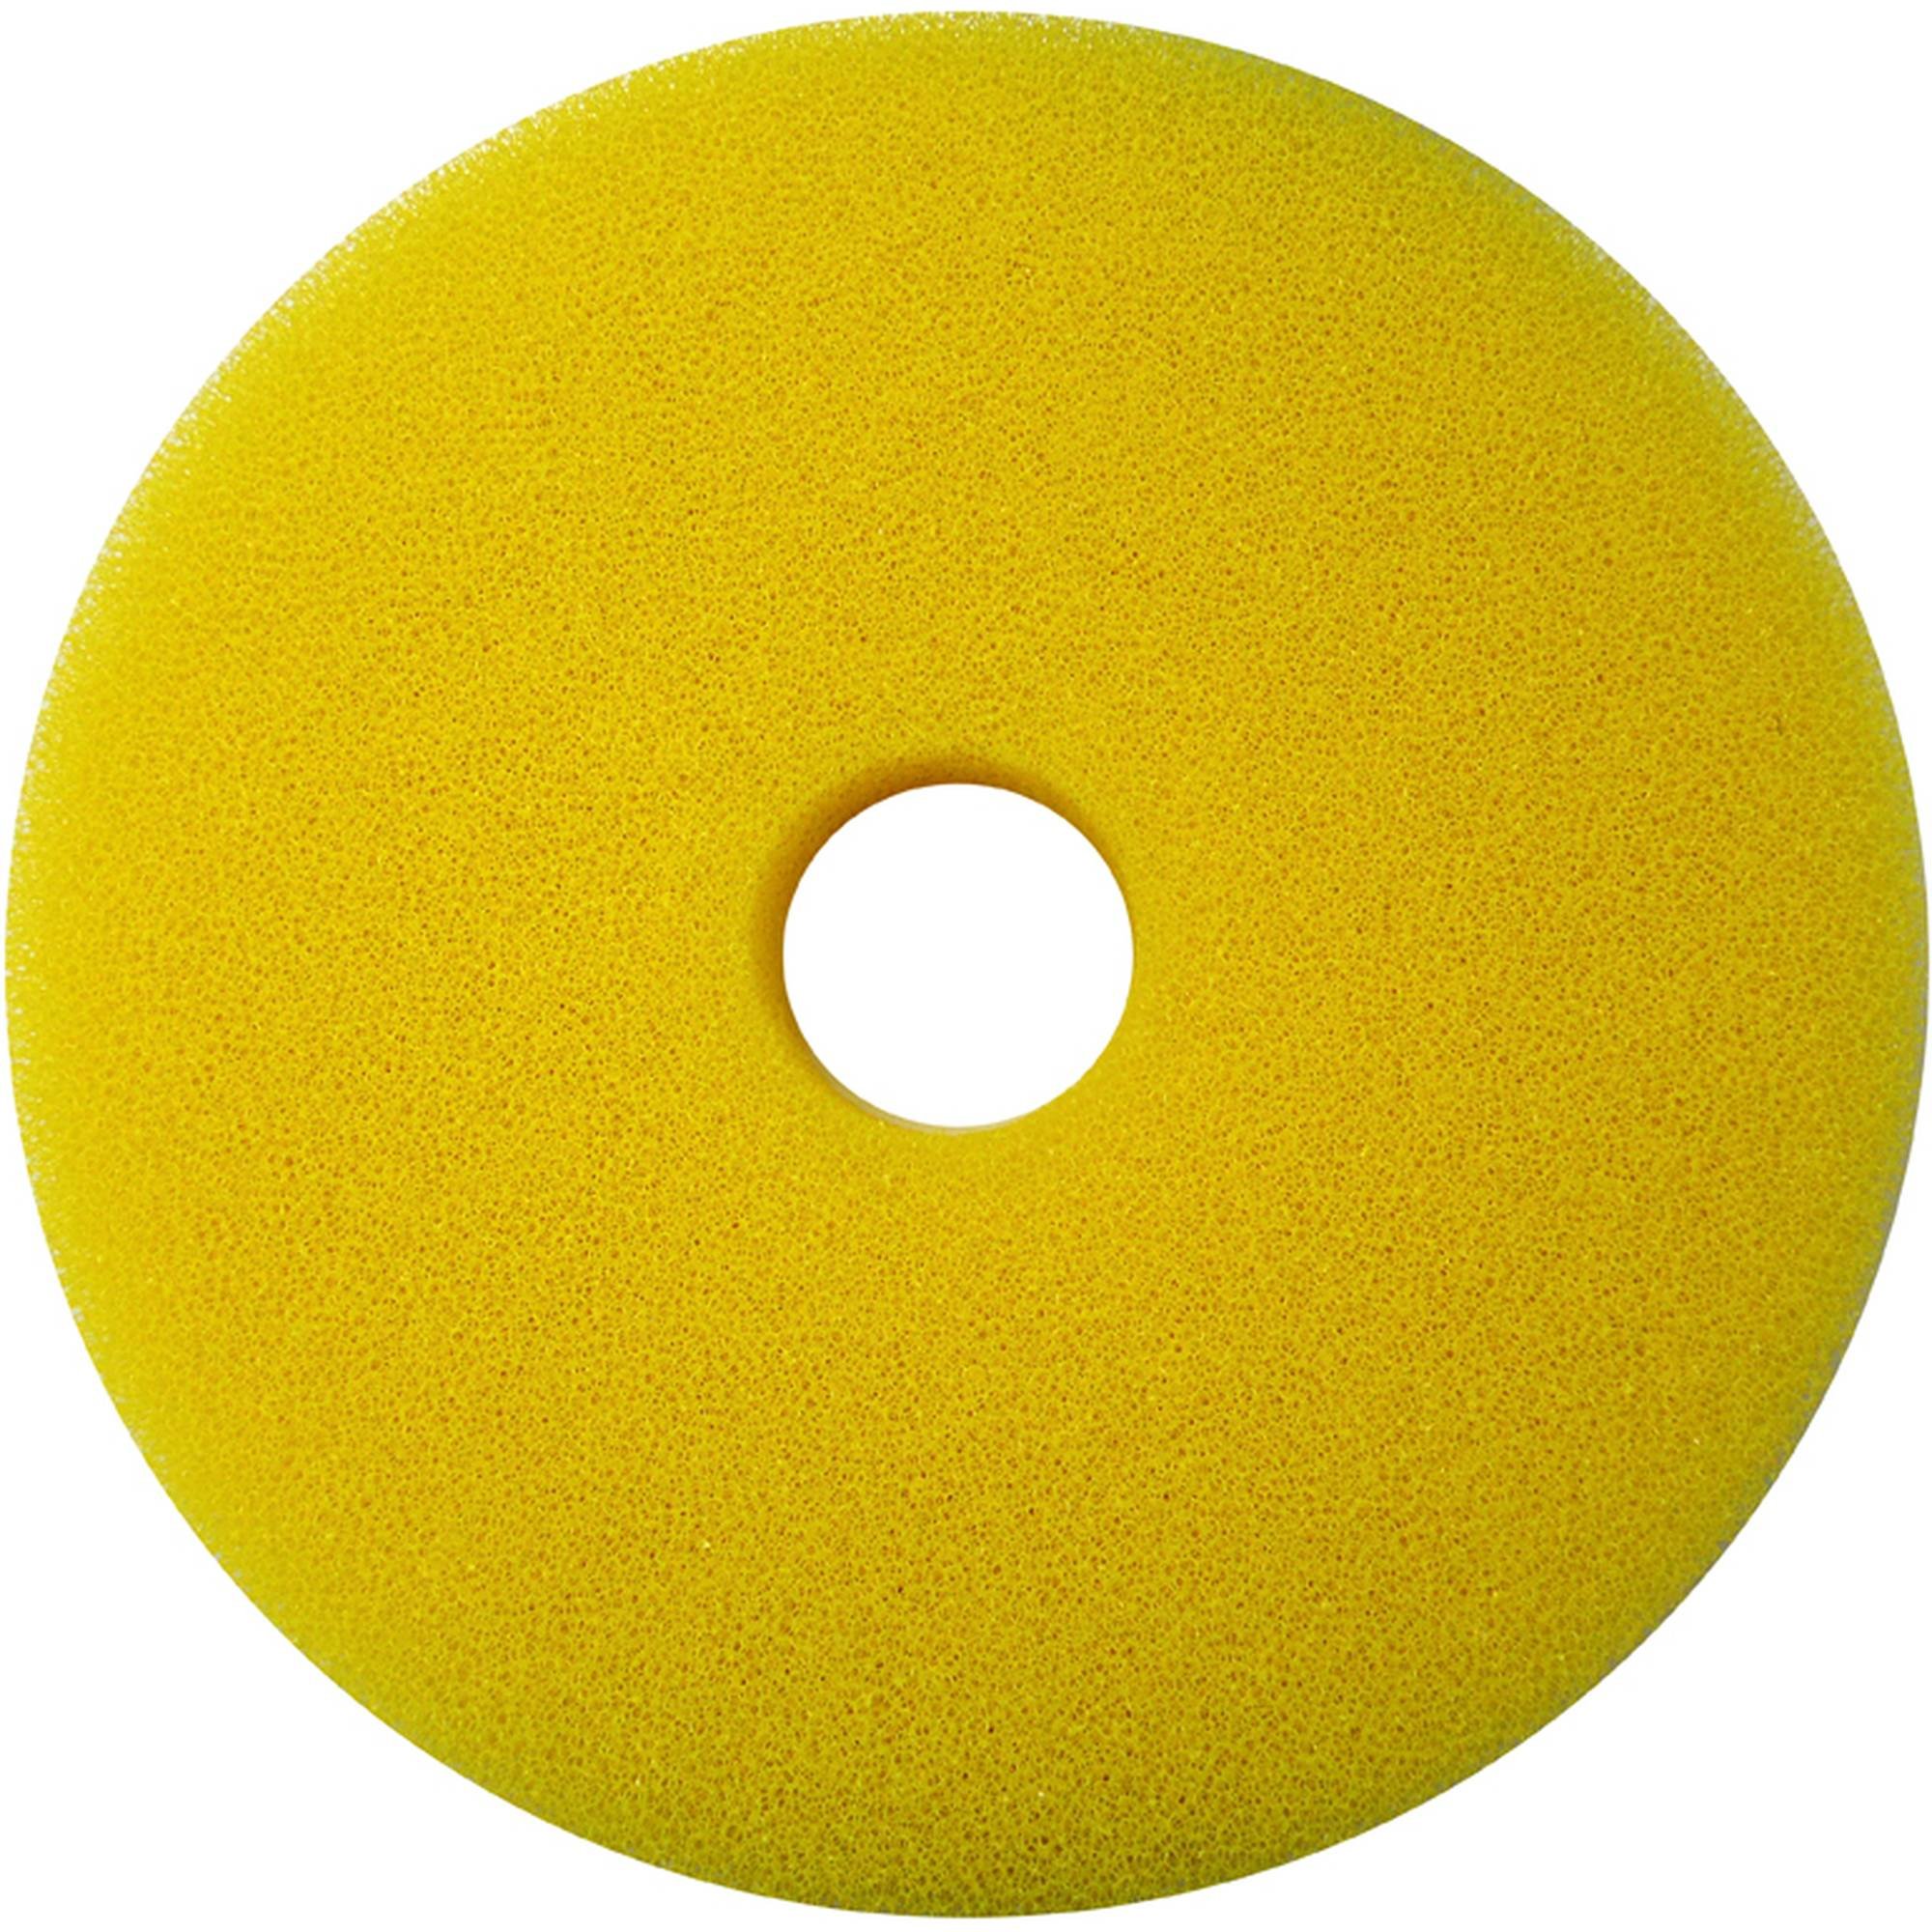 Filtersponge medium/yellow FPU10000-00